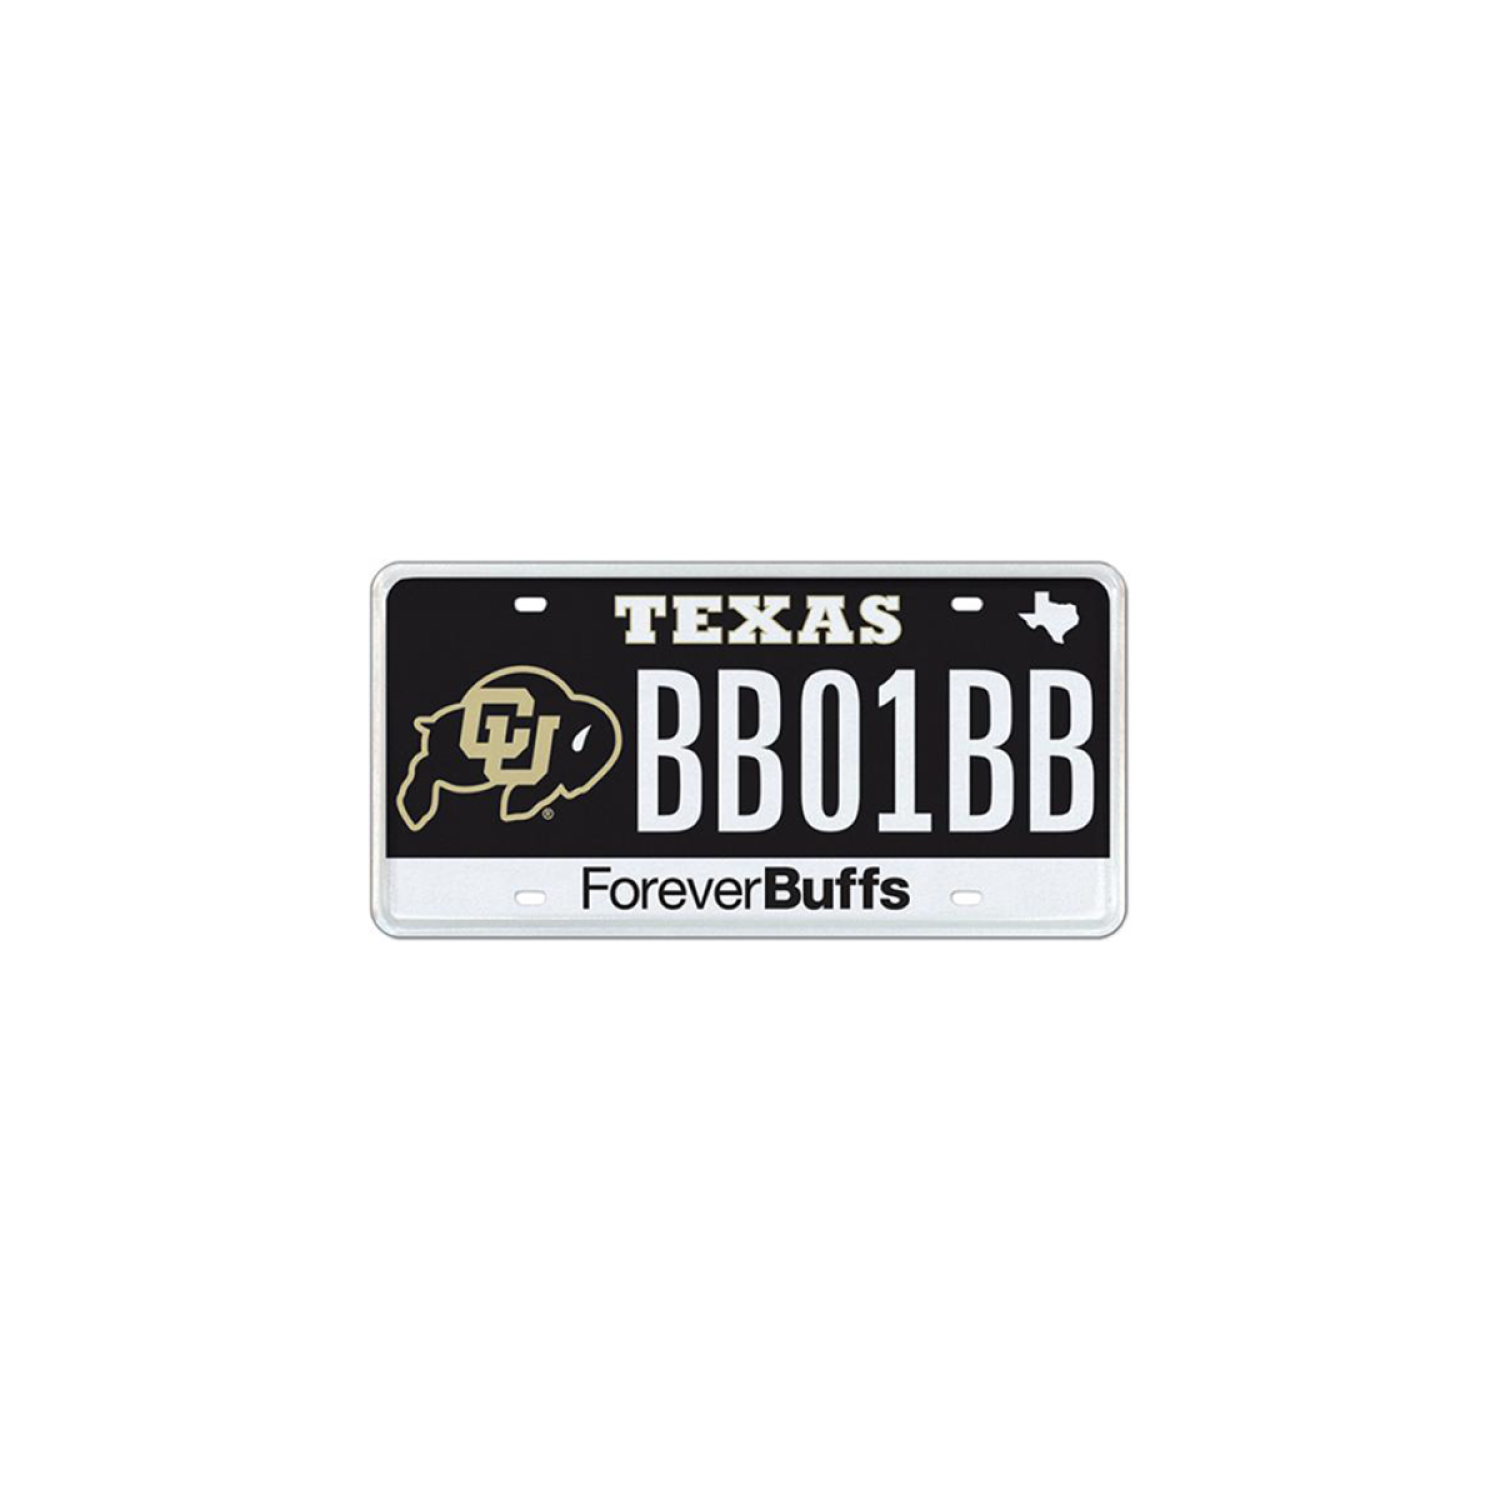 CU Boulder Texas license plate